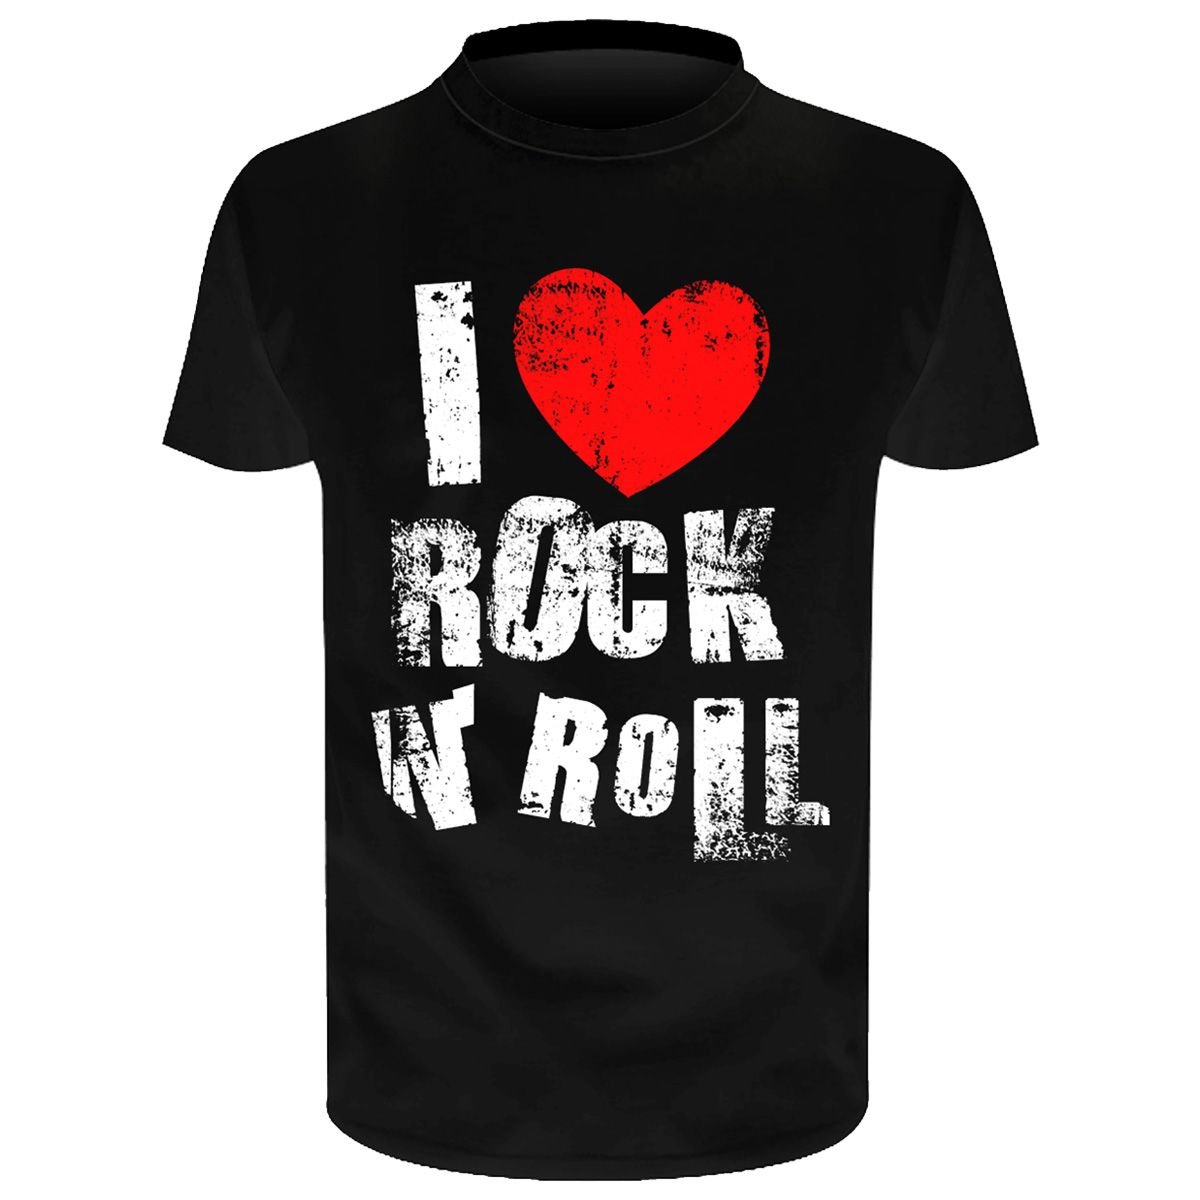 Don t roll. I Love Rock.